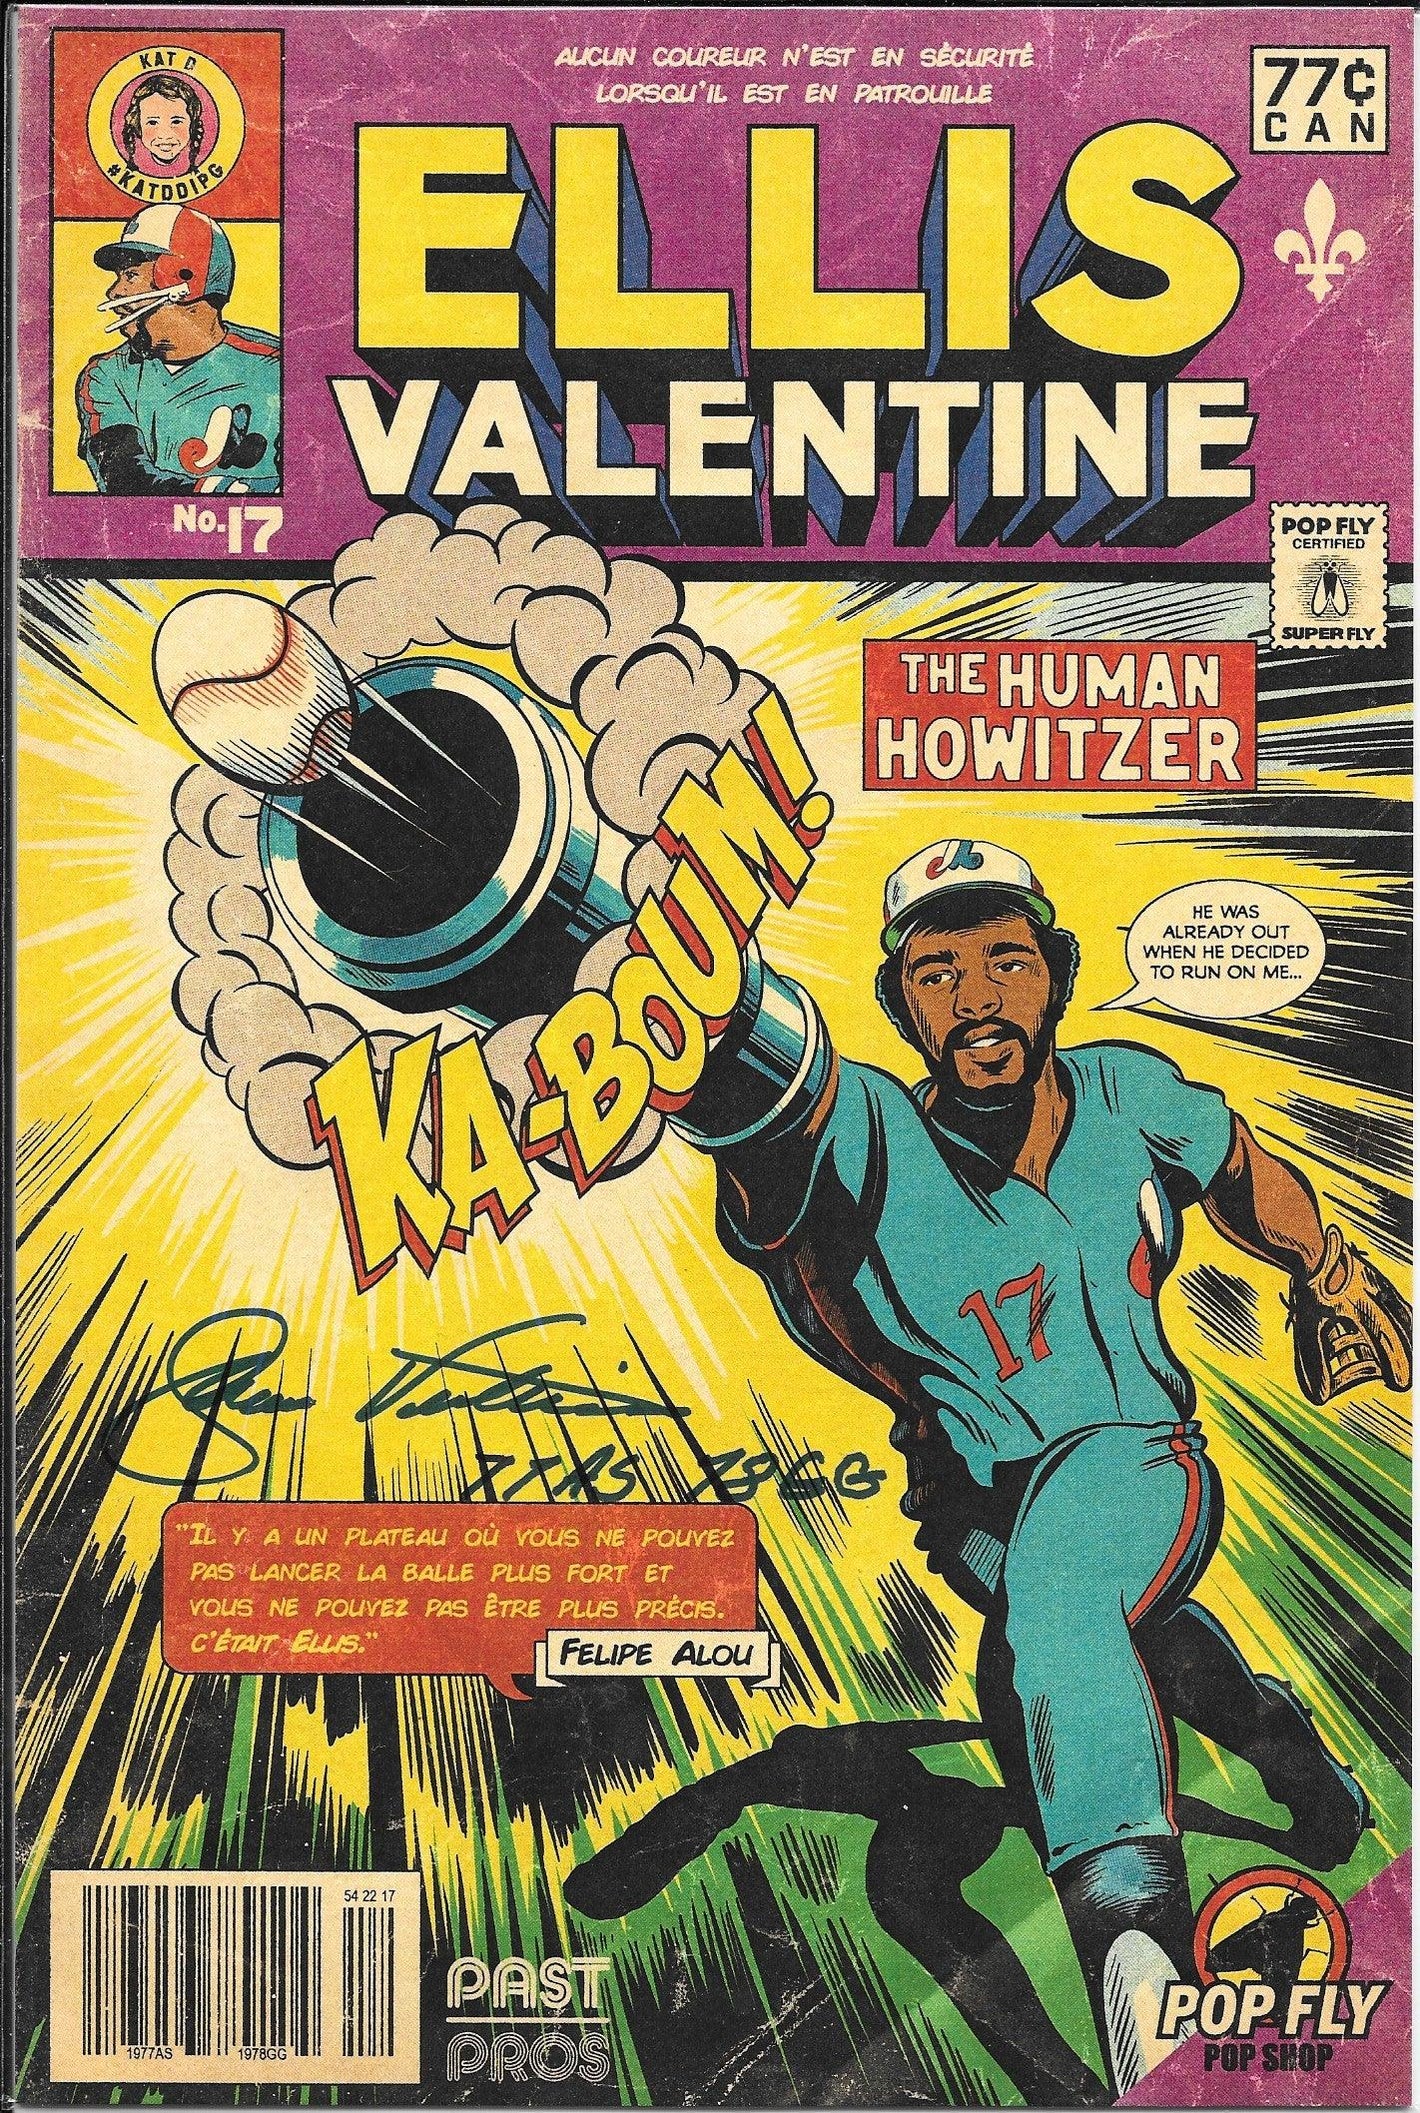 Ellis Valentine - "Human Howitzer" Pop Fly Pop Shop Print #57 – Signed by Ellis Valentine w/ Inscription (RARE) - PastPros